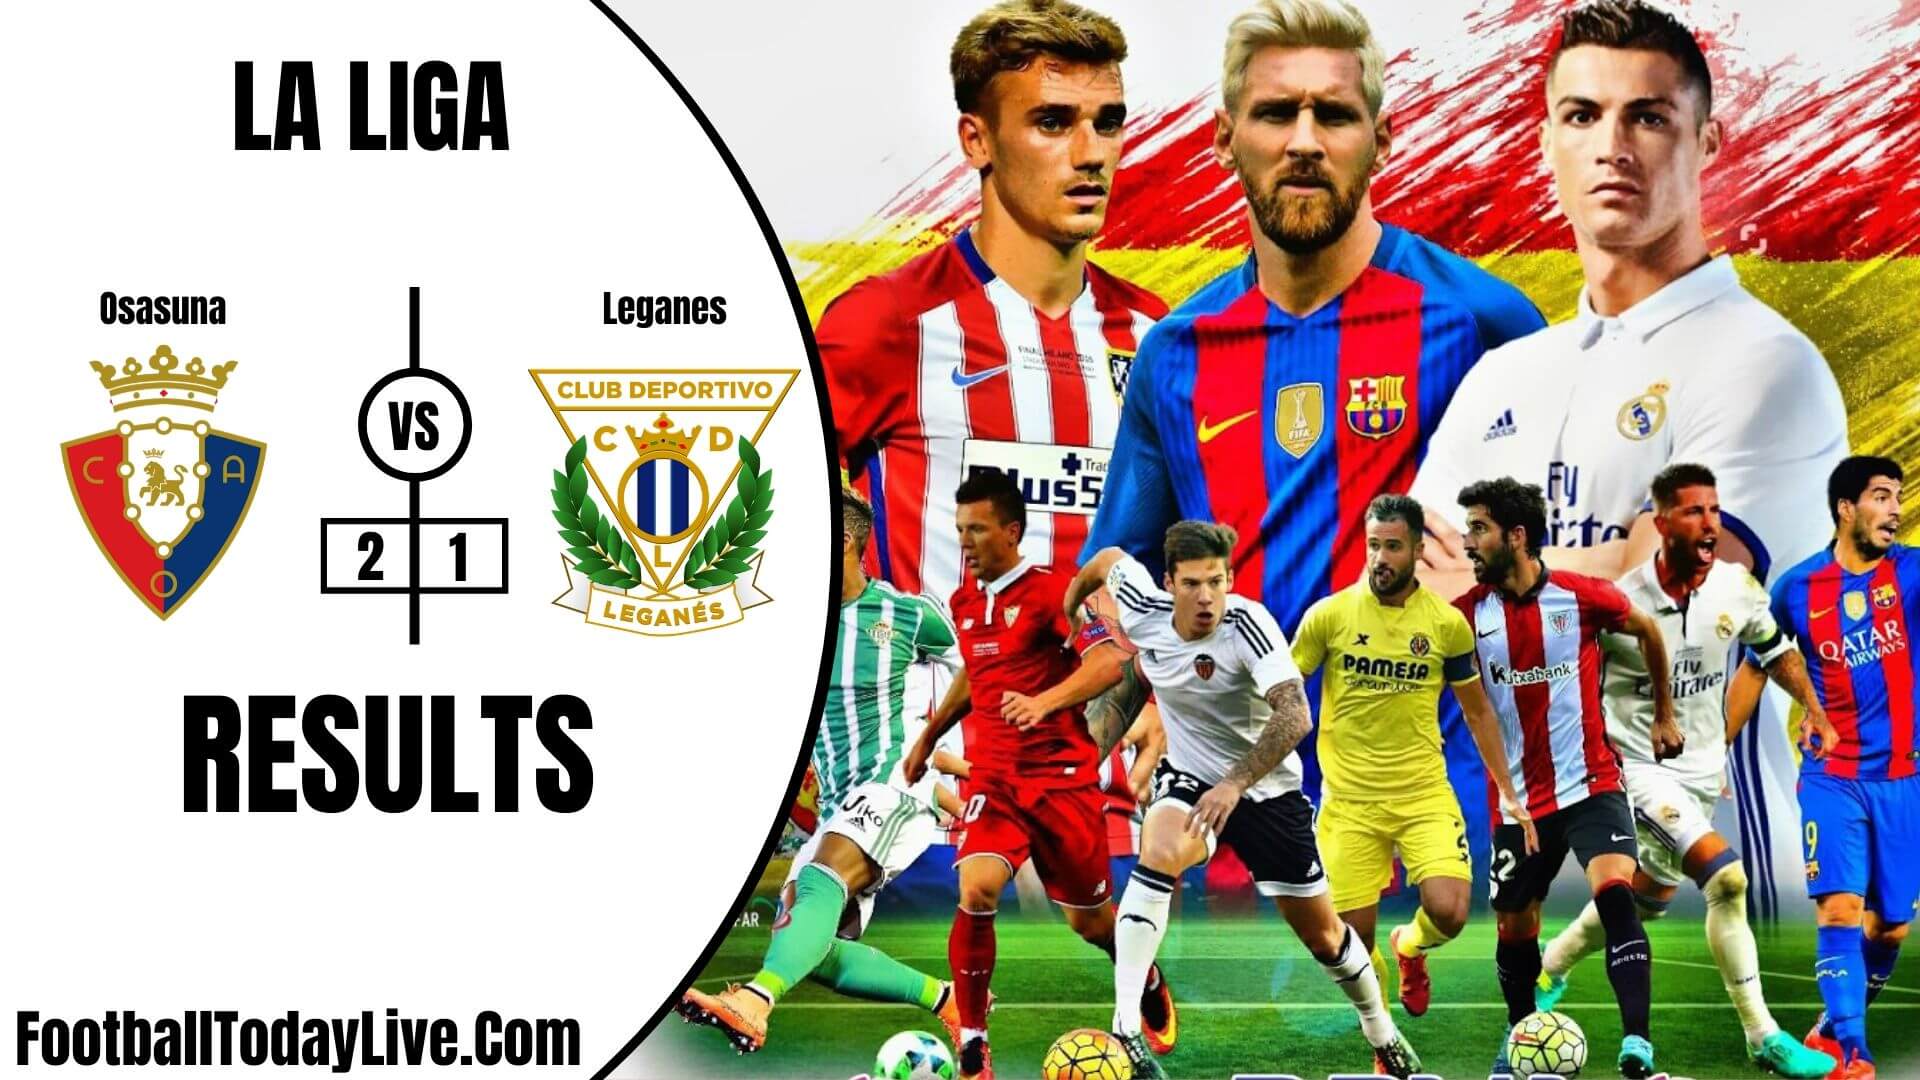 Osasuna Vs Leganes | La Liga Week 32 Result 2020